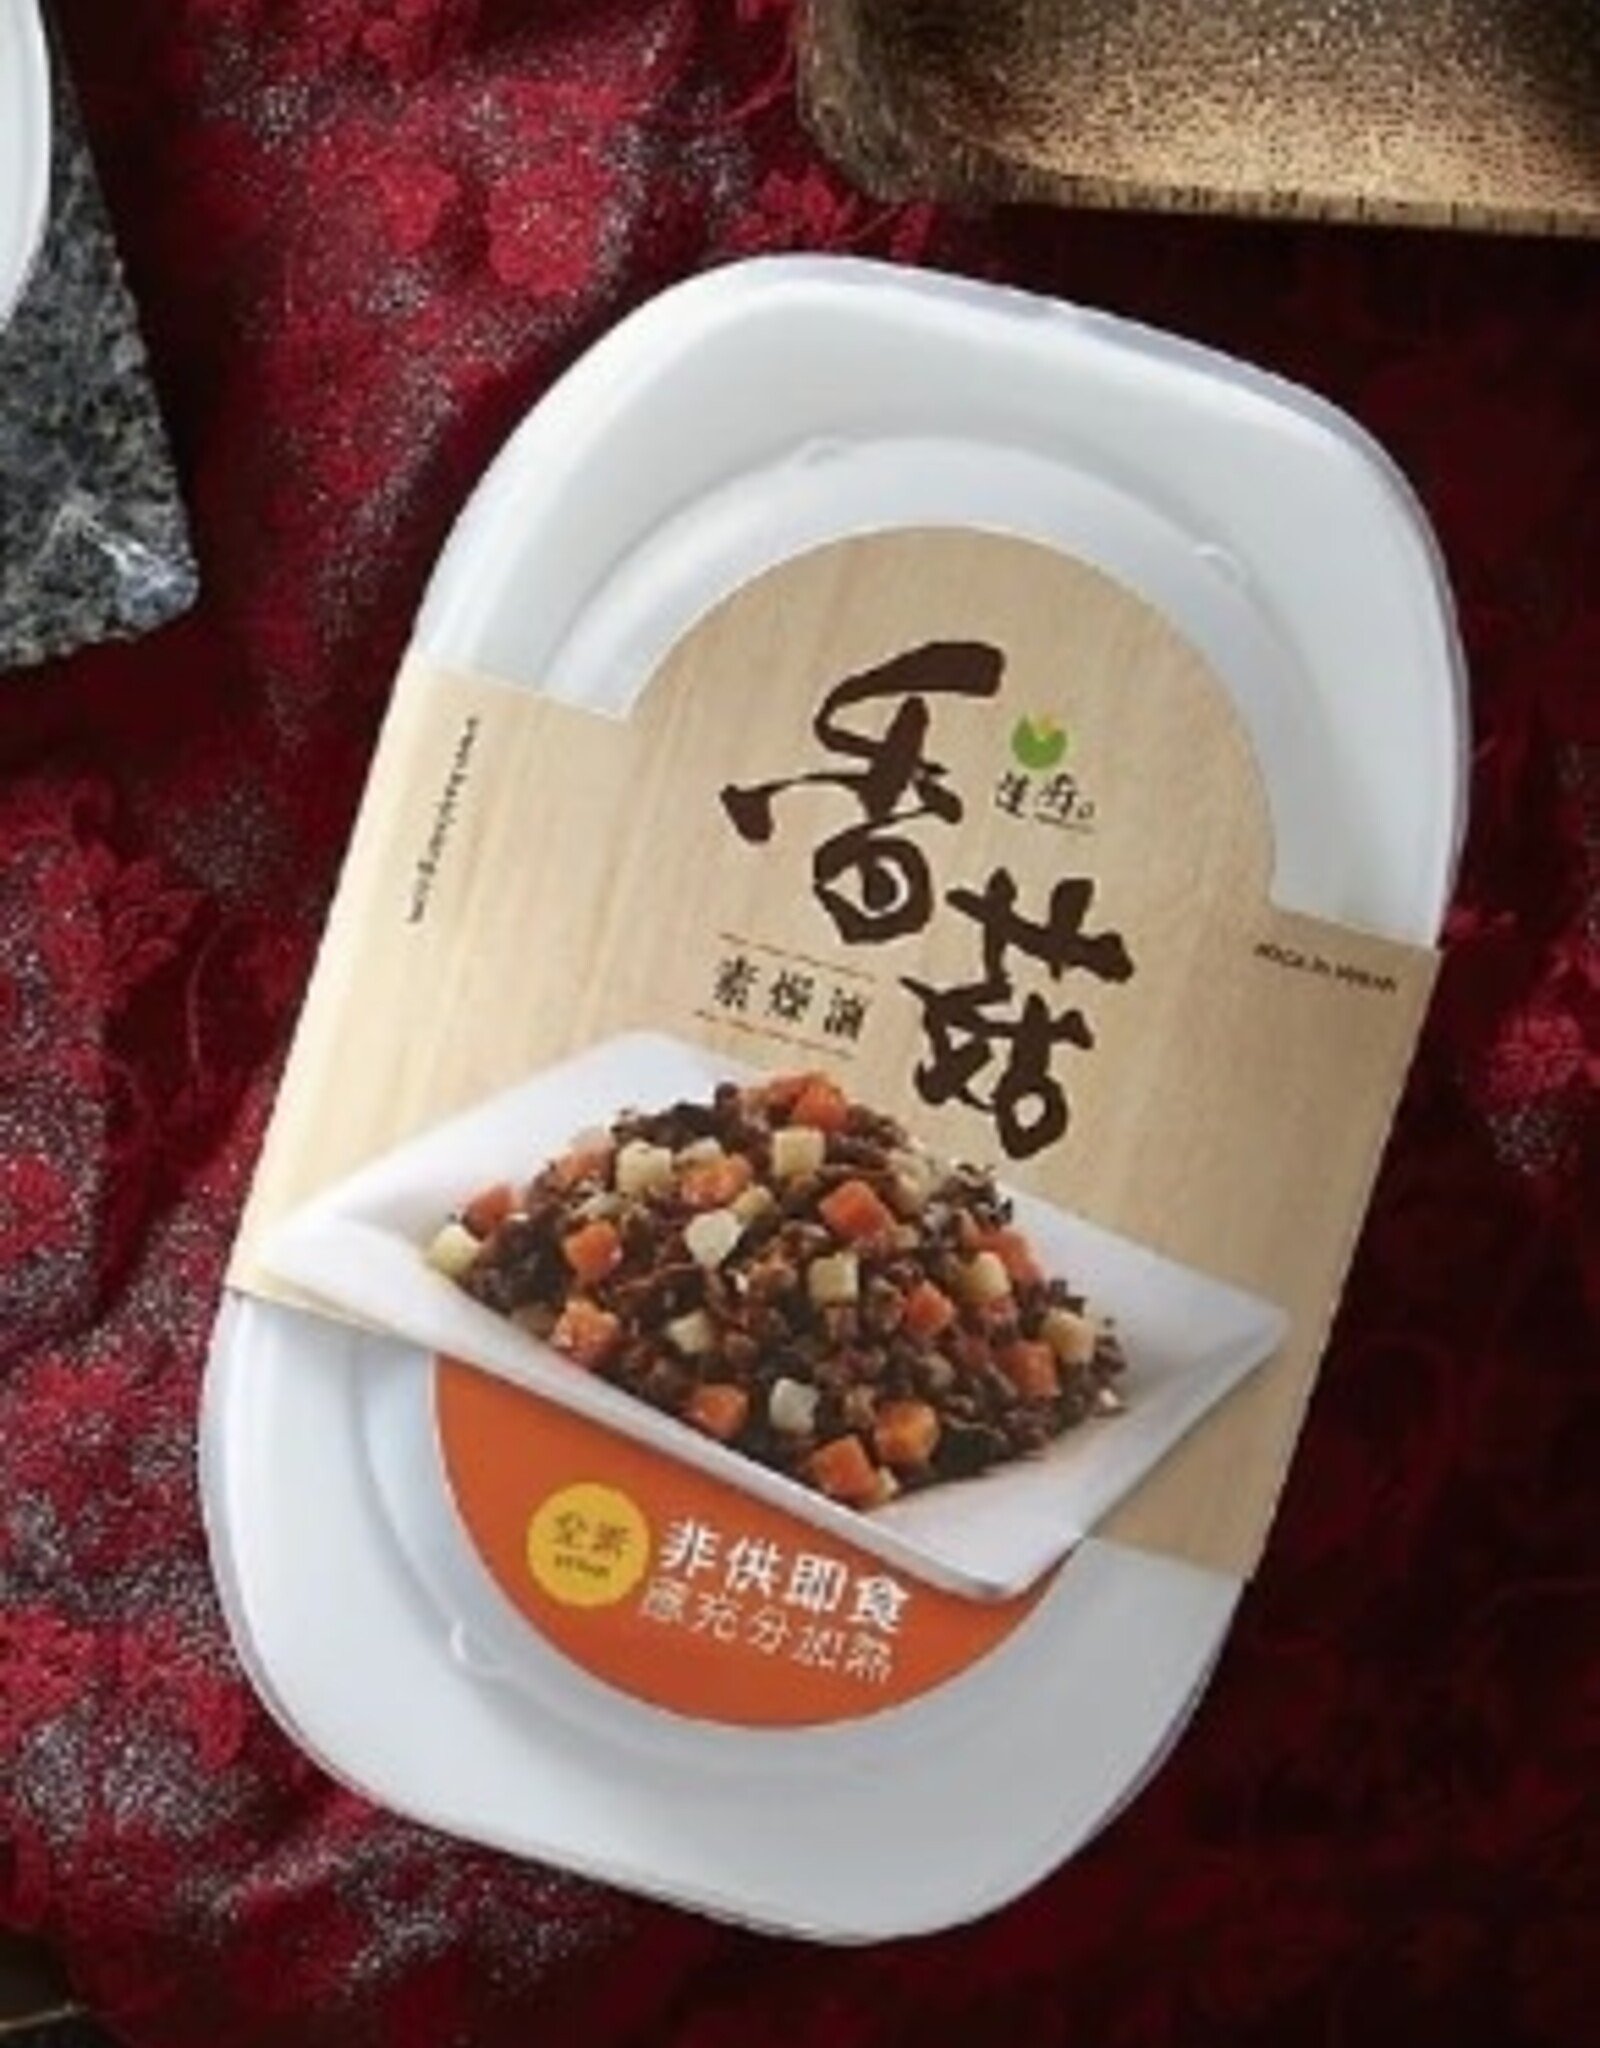 Bai Yi Xiang * 蓮廚/百一香 (BYX) Vegan Braised Ground Meat with Mushrooms*(蓮廚)香菇素燥滷